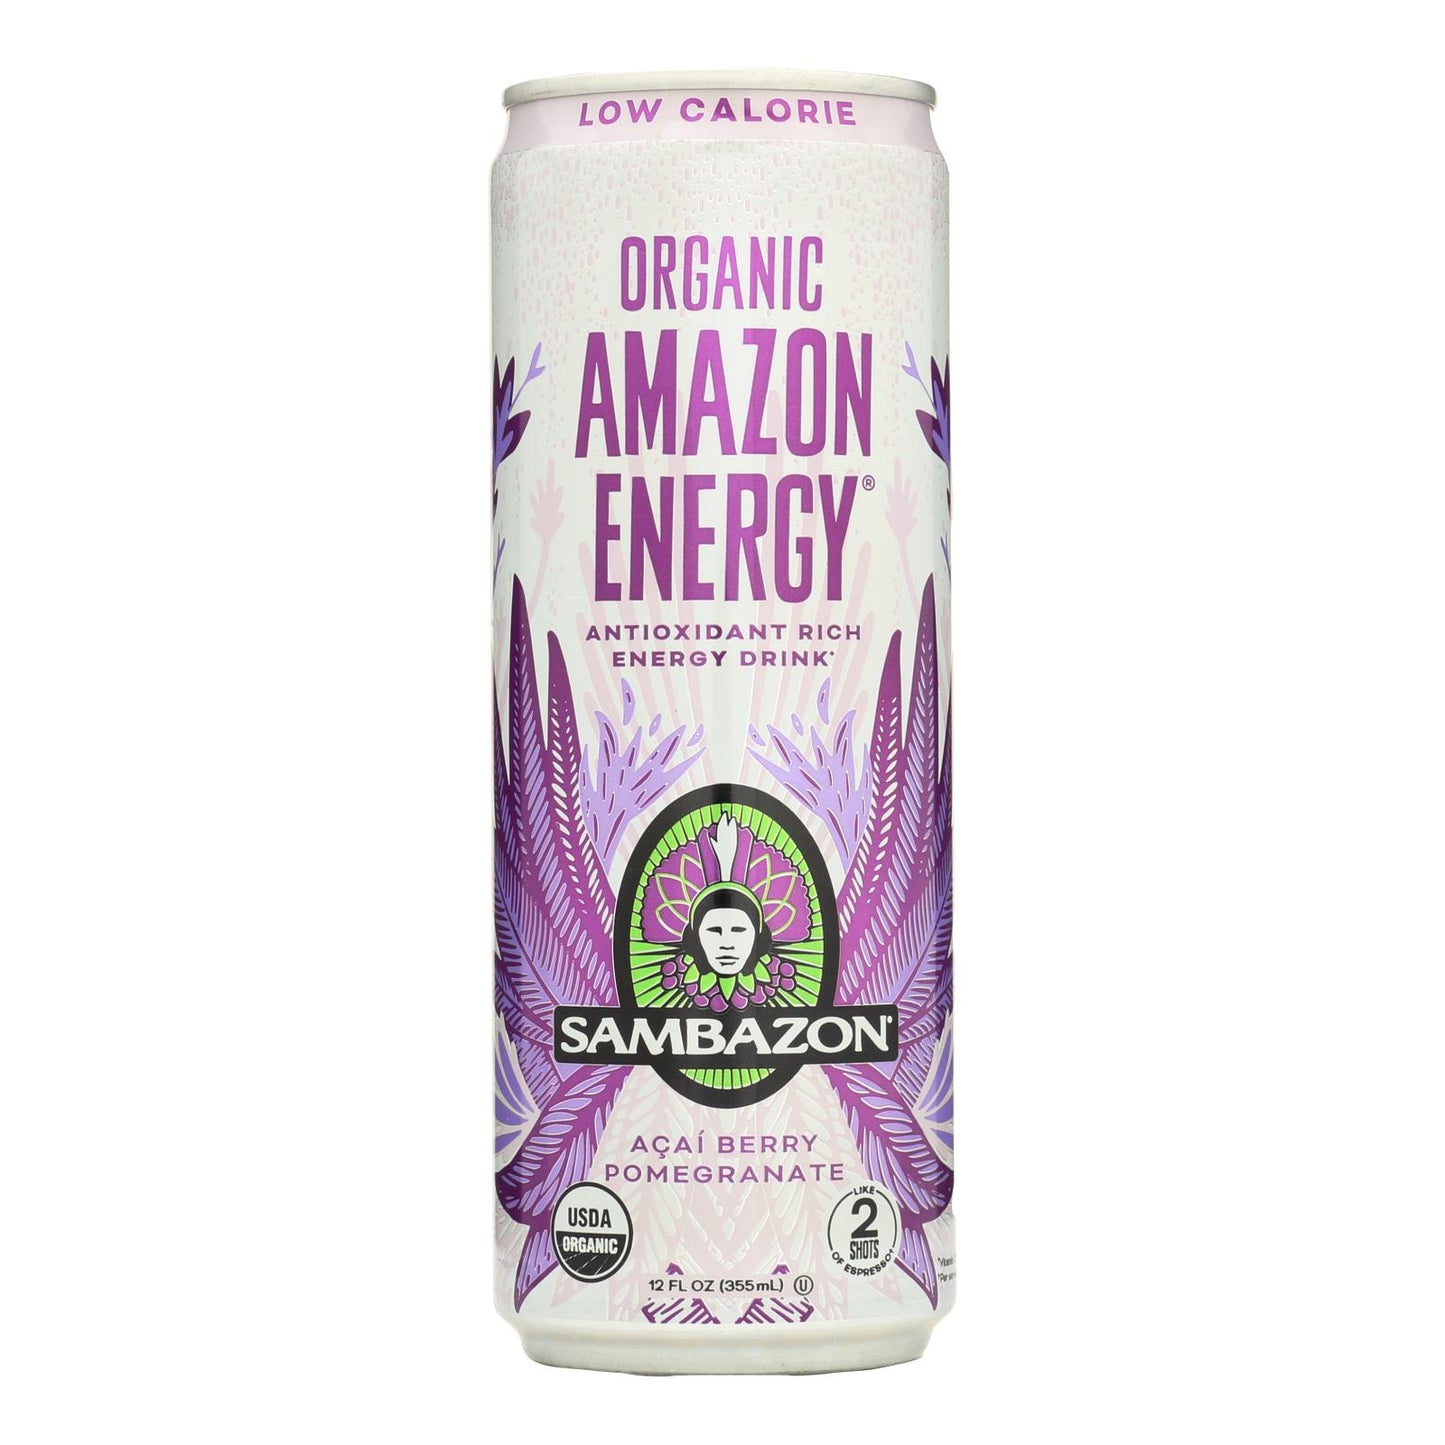 Sambazon Organic Amazon Energy Drink - Low Calorie - Case Of 12 - 12 Fl Oz - OnlyNaturals